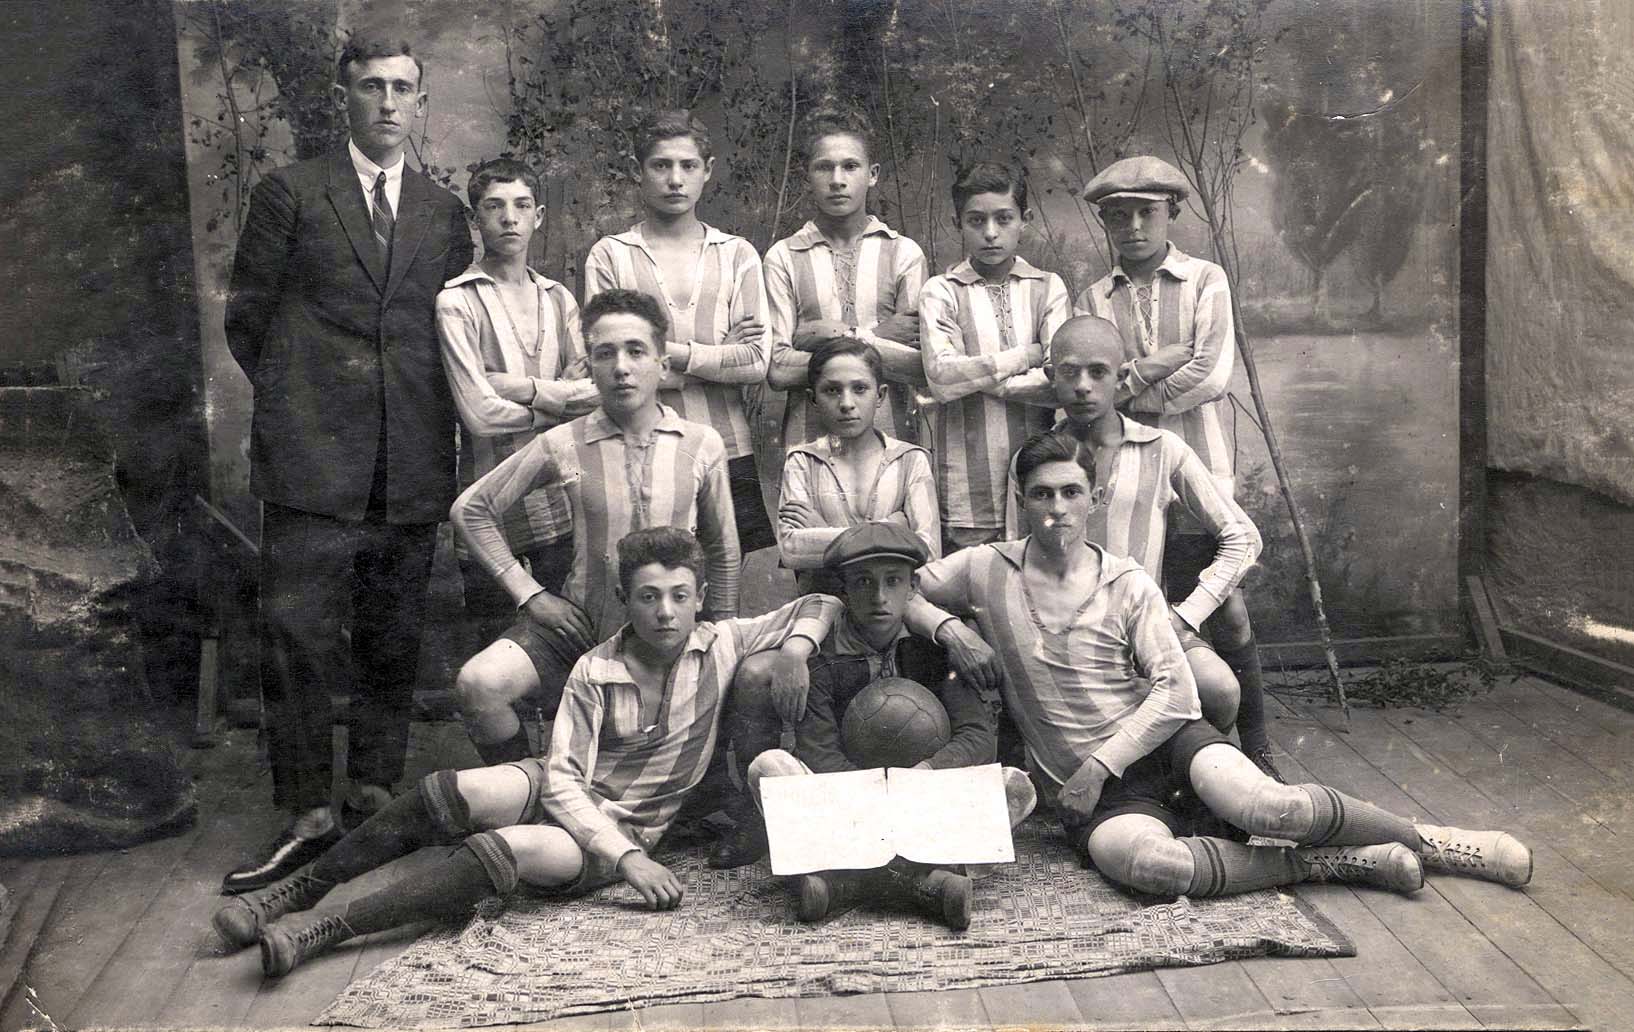 Pinsk, Polonia, 2/10/1929. Un equipo judío de fútbol